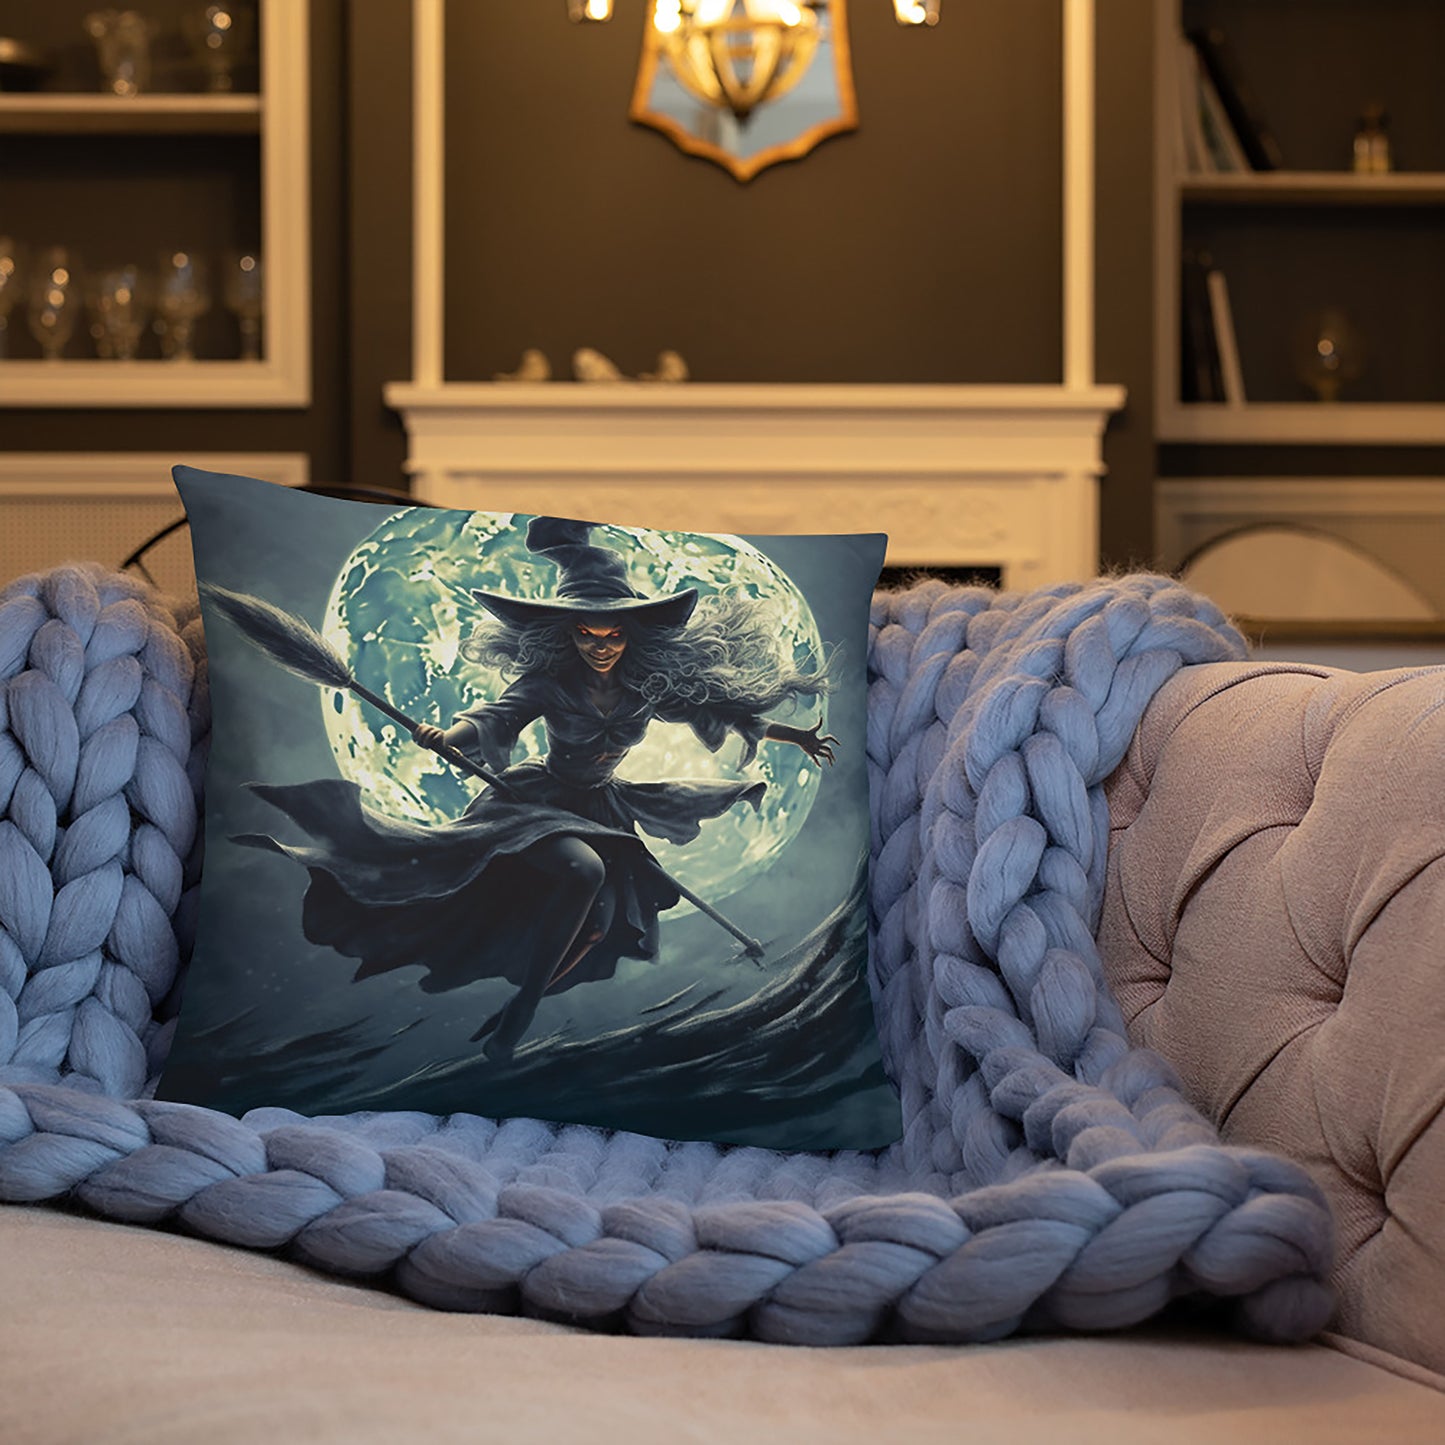 Halloween Throw Pillow Midnight Witch's Flight Polyester Decorative Cushion 18x18